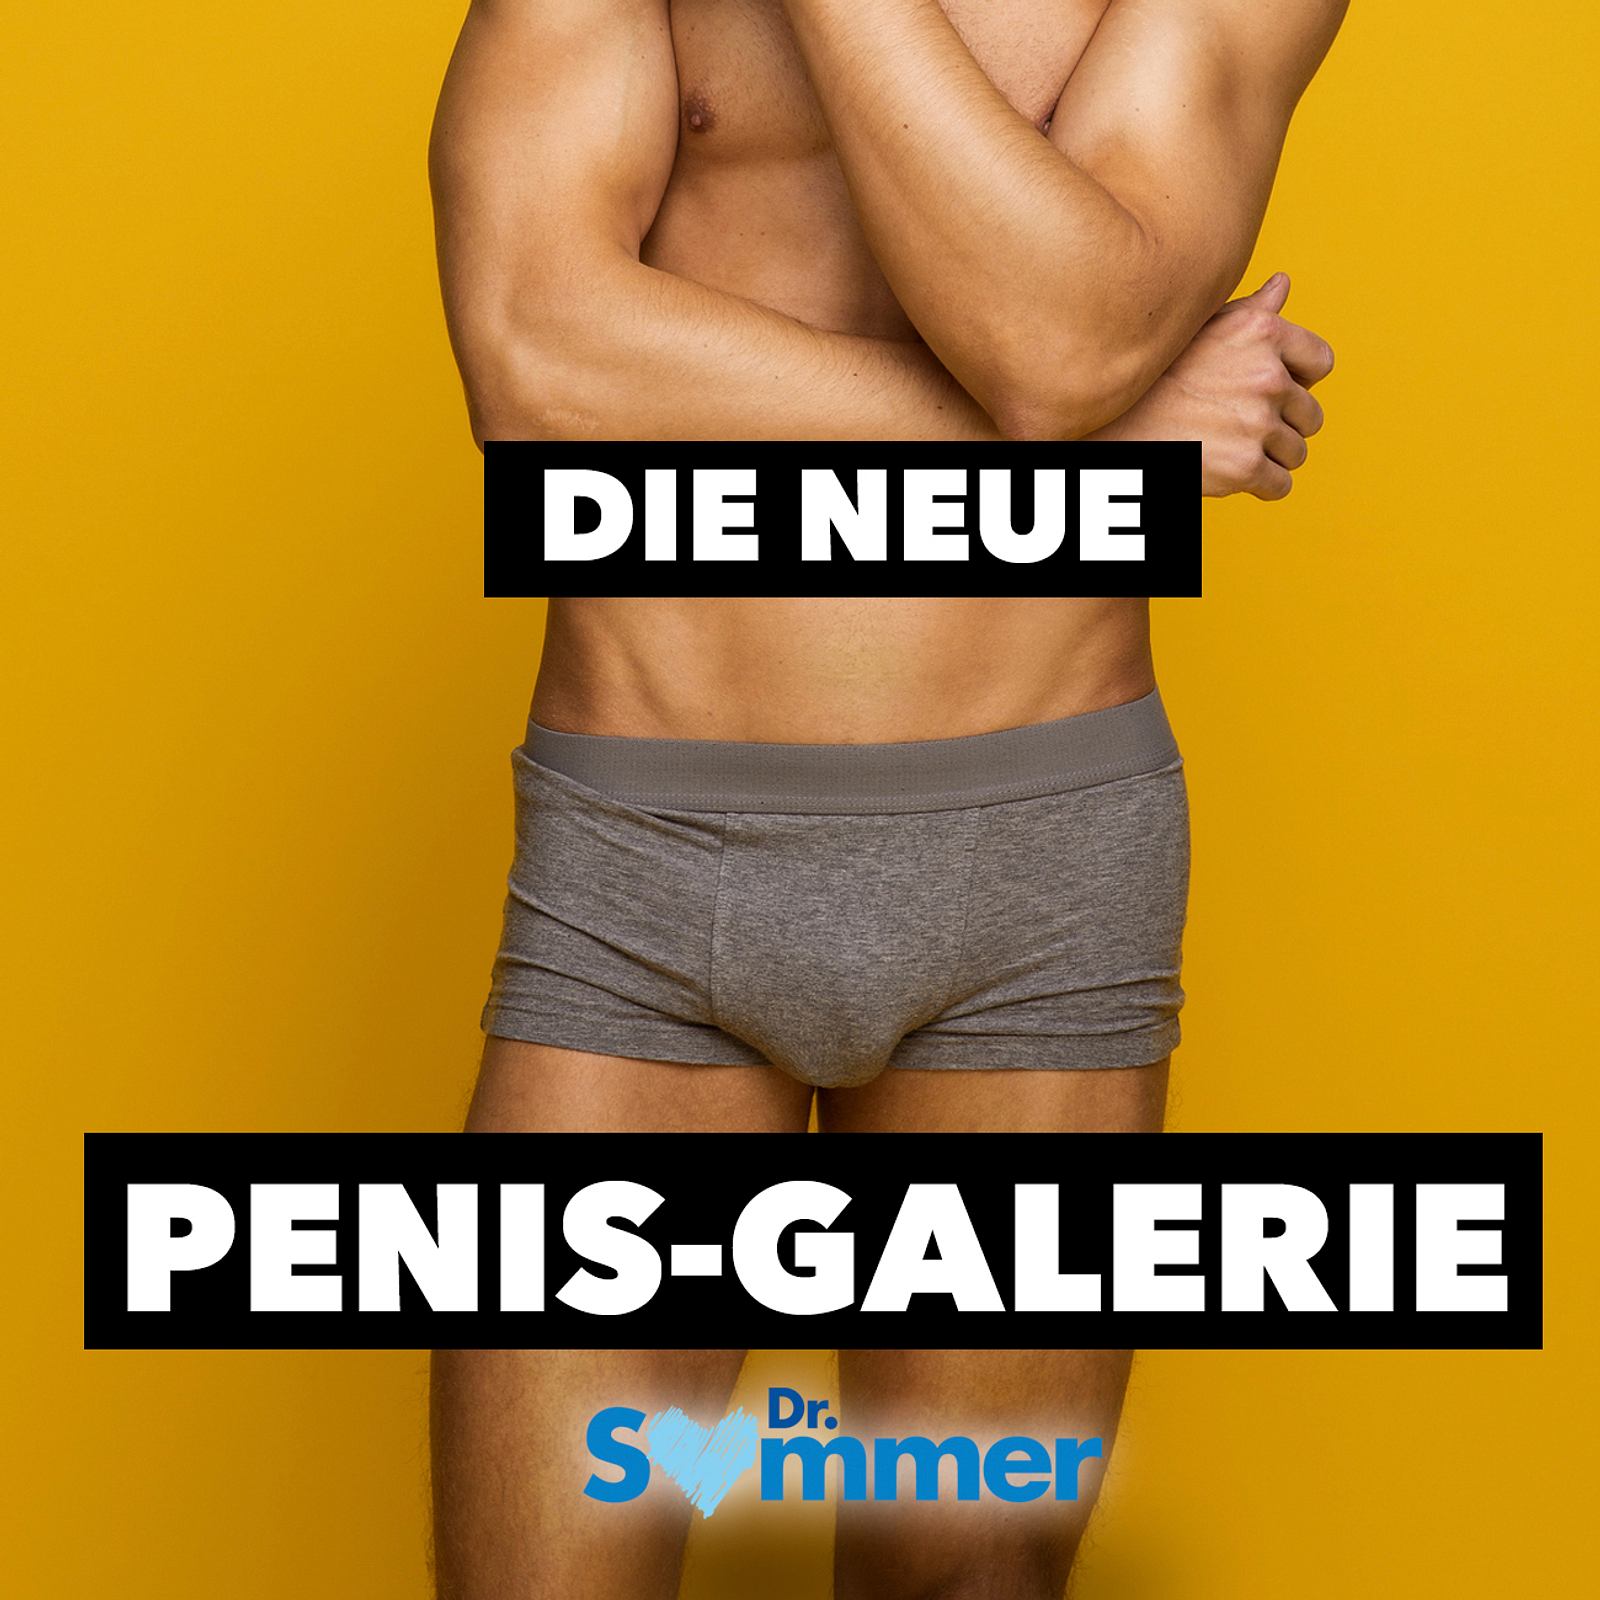 Die neue Penis-Galerie! | BRAVO